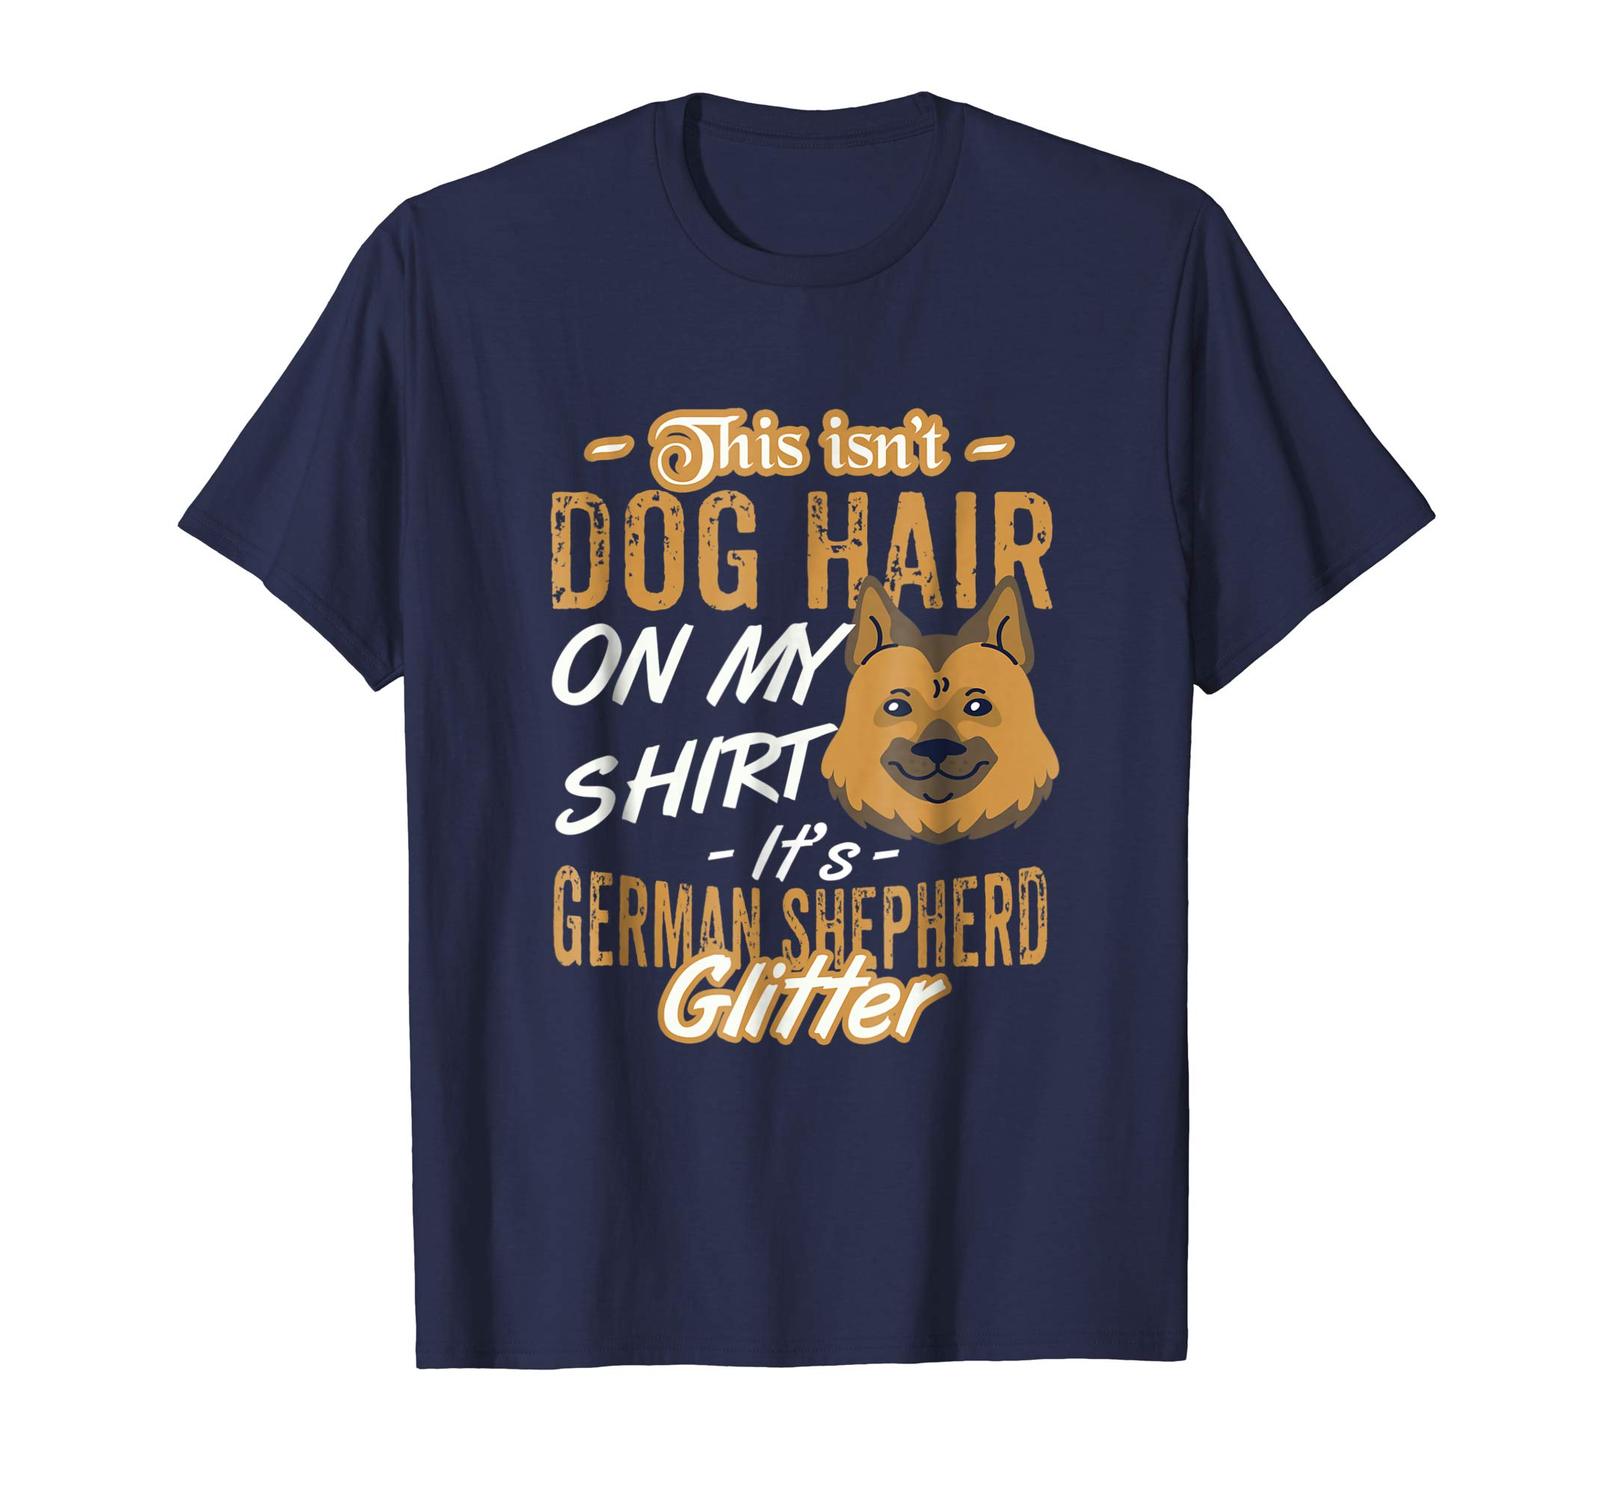 Dog Fashion - This Isn't Dog German Shepherd Dog TShirt For Men Women Men